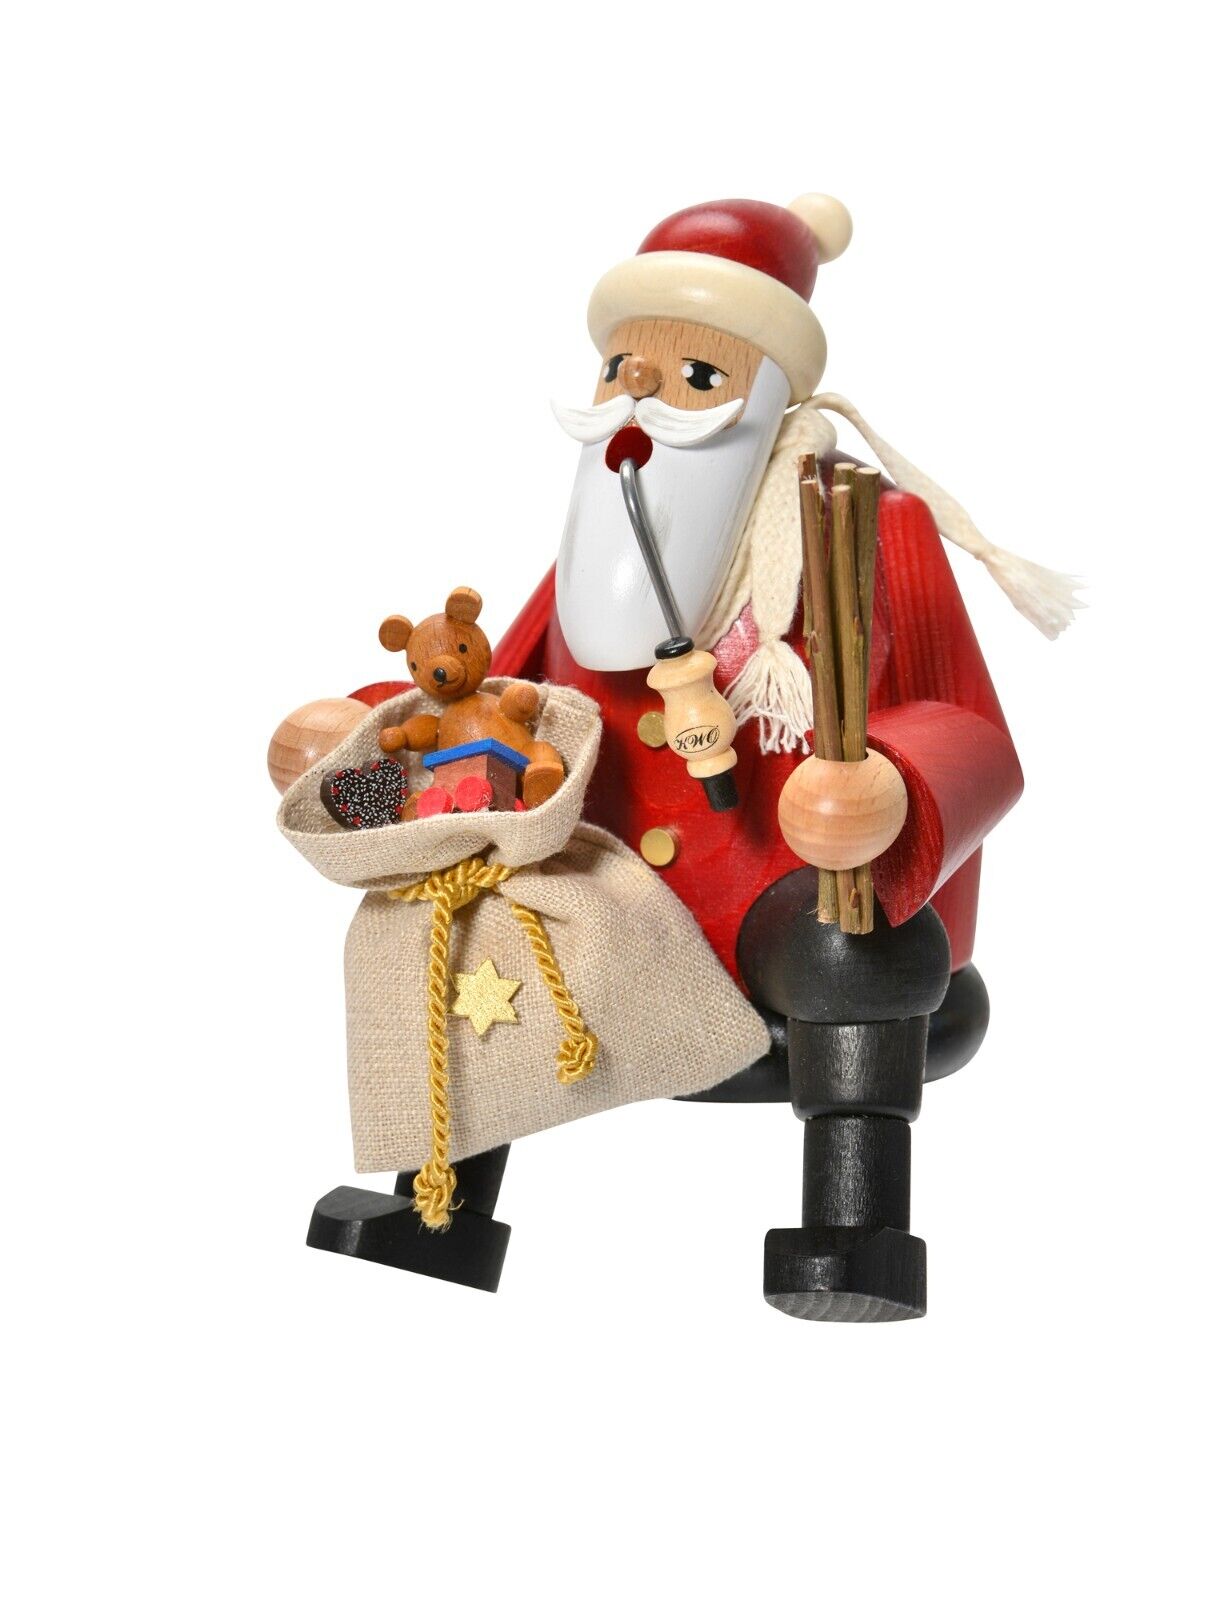 NEW IN BOX - KWO Sitting Santa Claus - German Smoker / Incense Burner